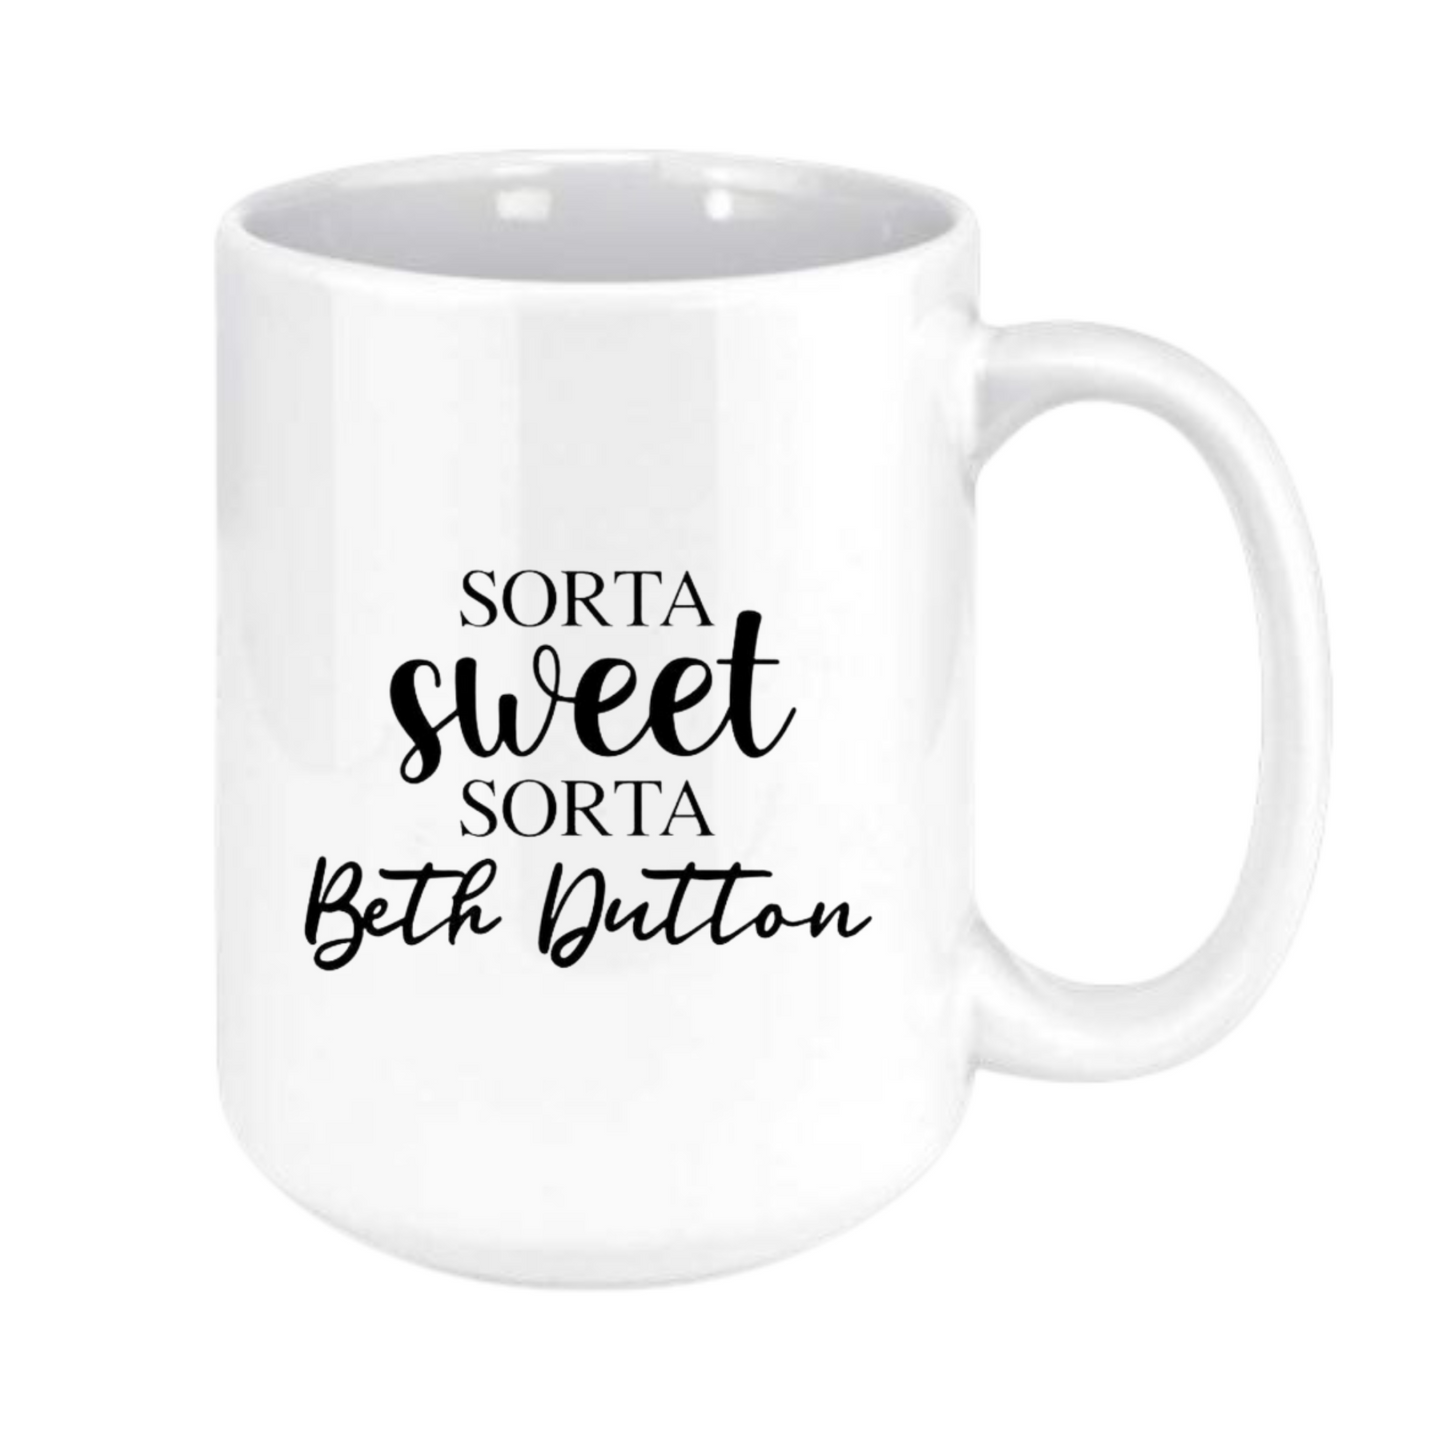 sorta sweet, sort beth dutton mug